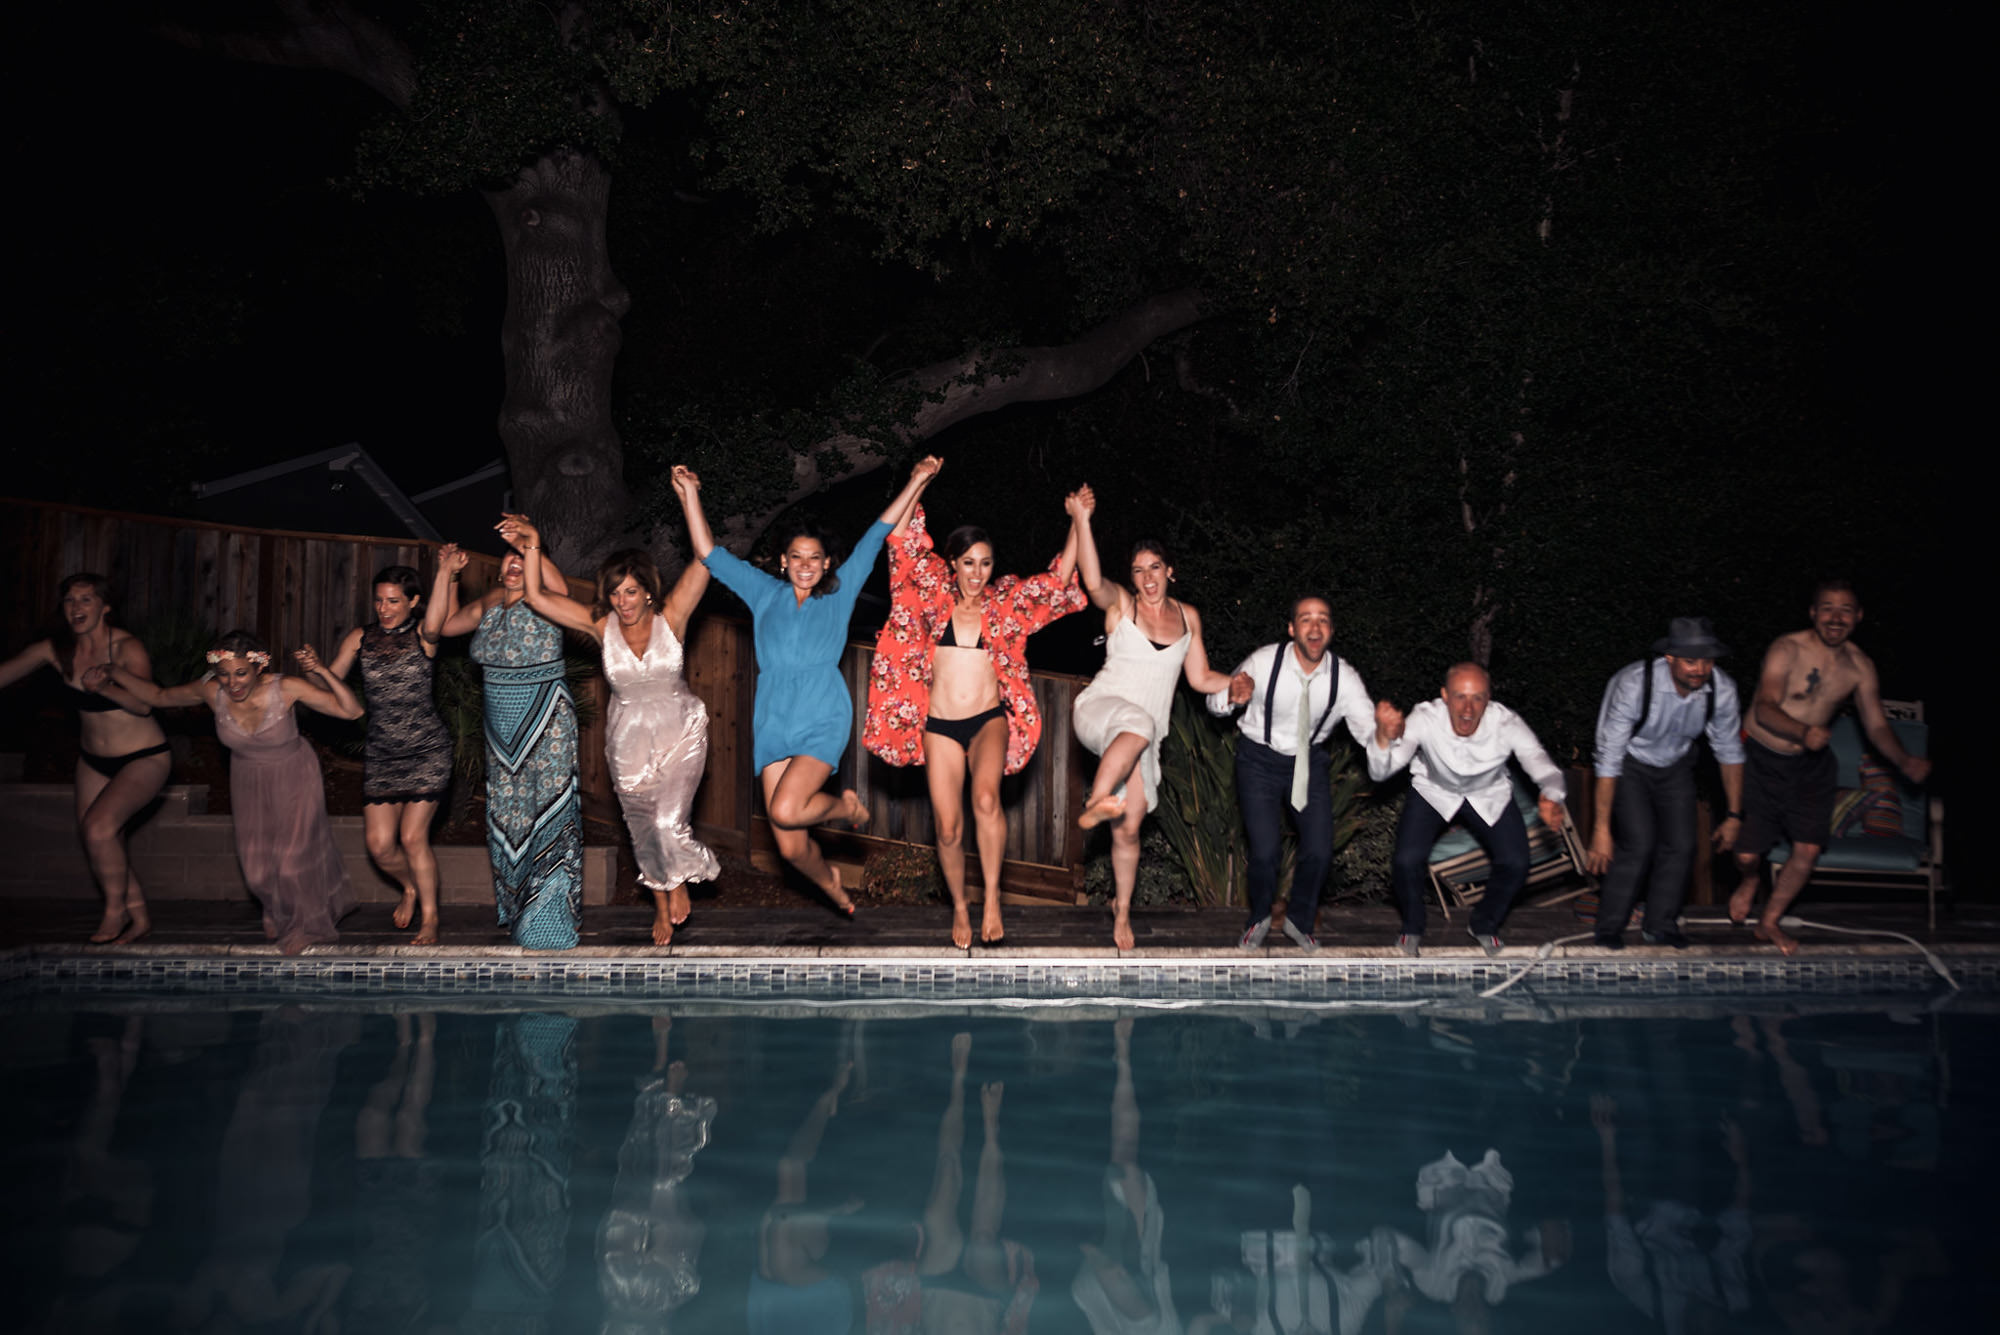 LOS GATOS Wedding DJ - End the fun night with a jump in the pool!